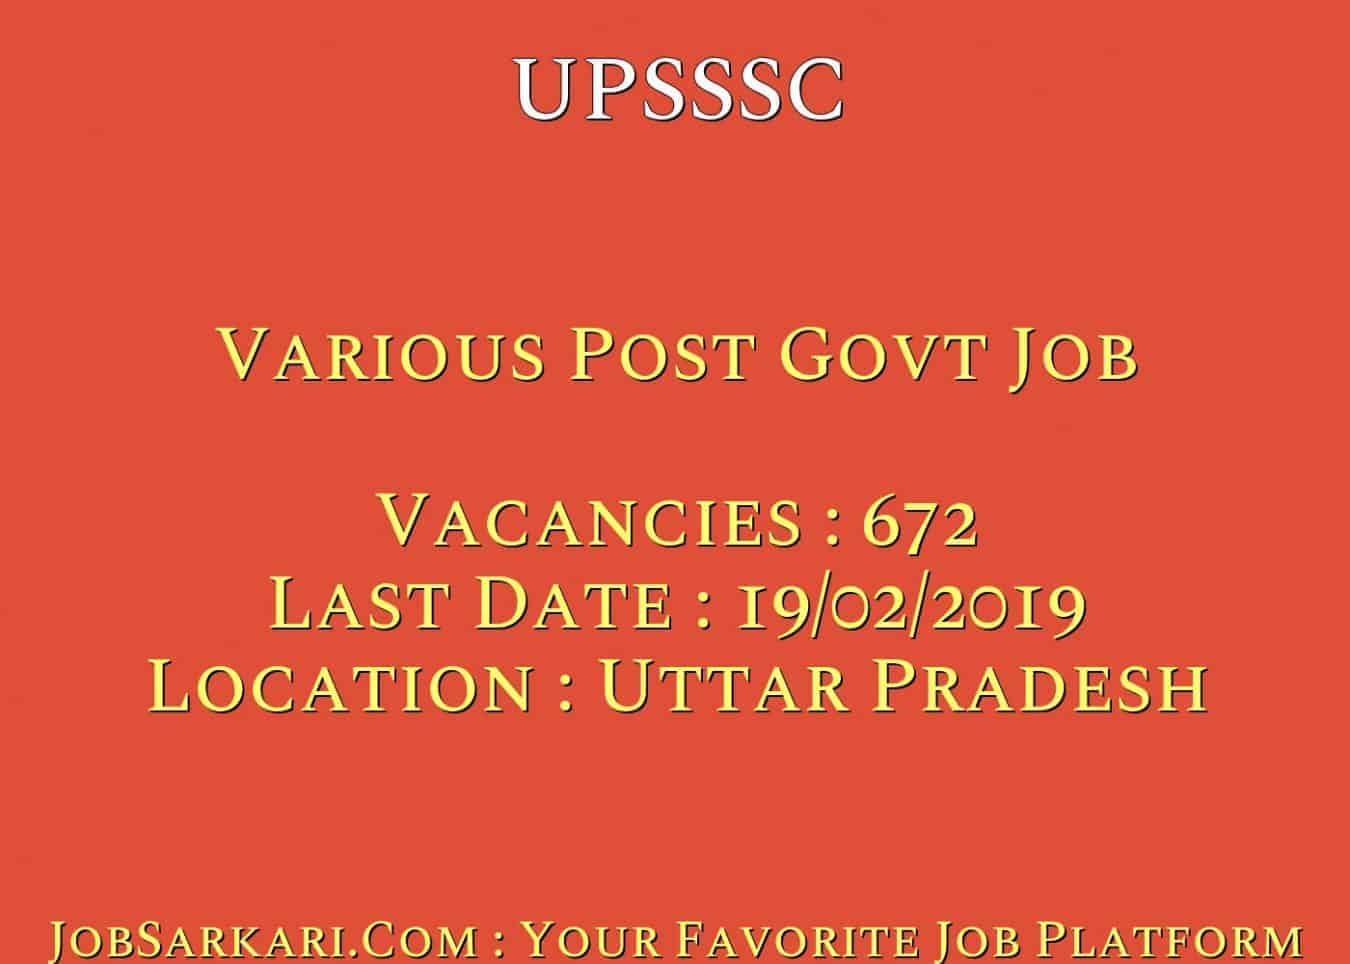 UPSSSC Recruitment 2019 For Various Post Govt Job